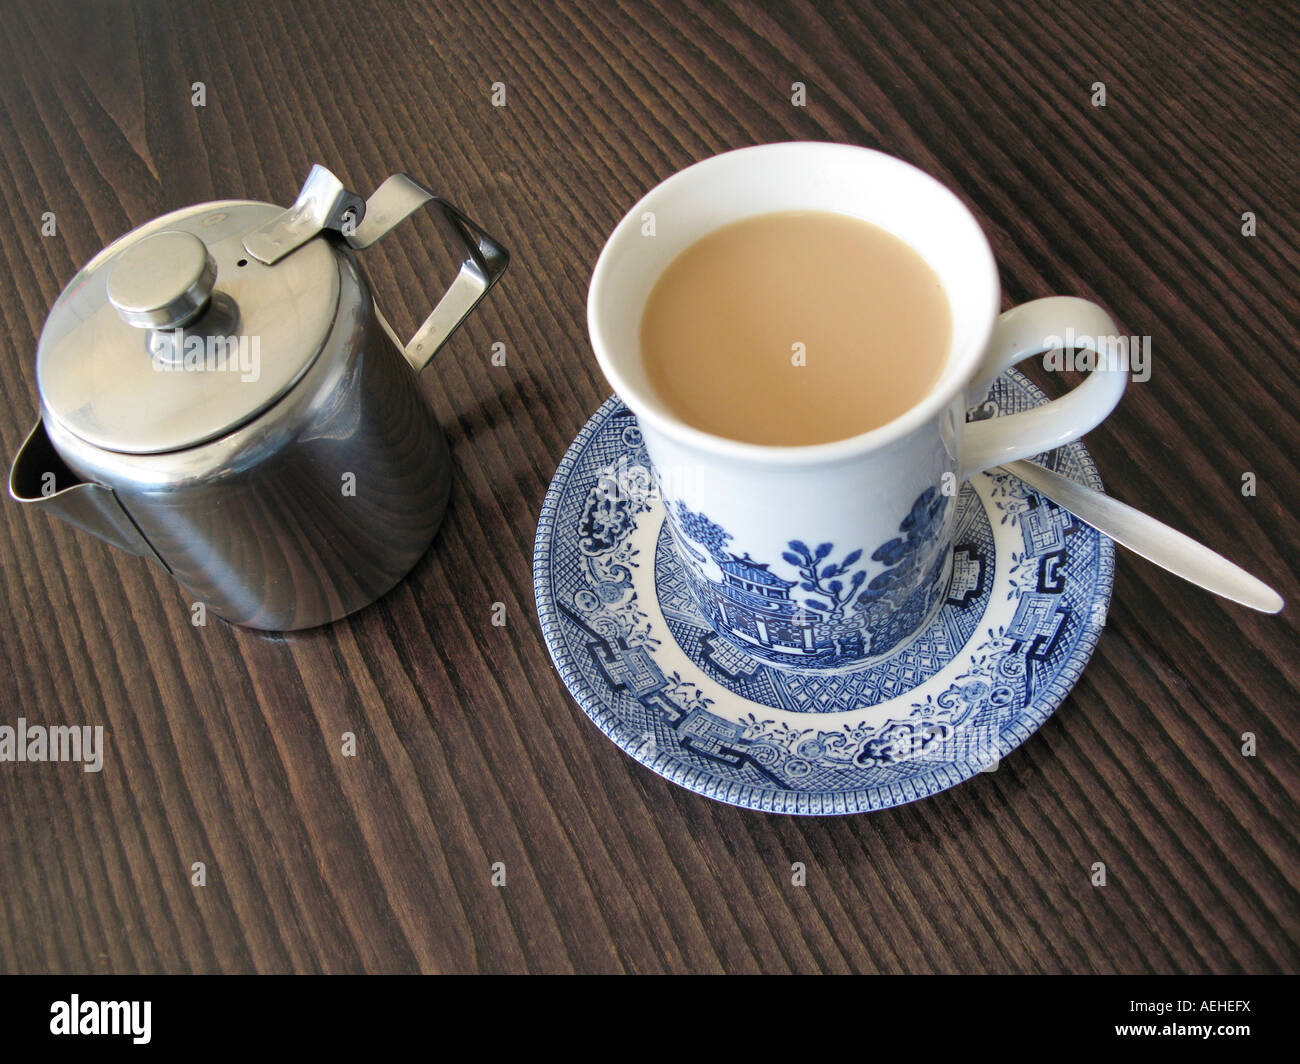 mug-of-tea-with-teapot-wales-uk-AEHEFX.jpg